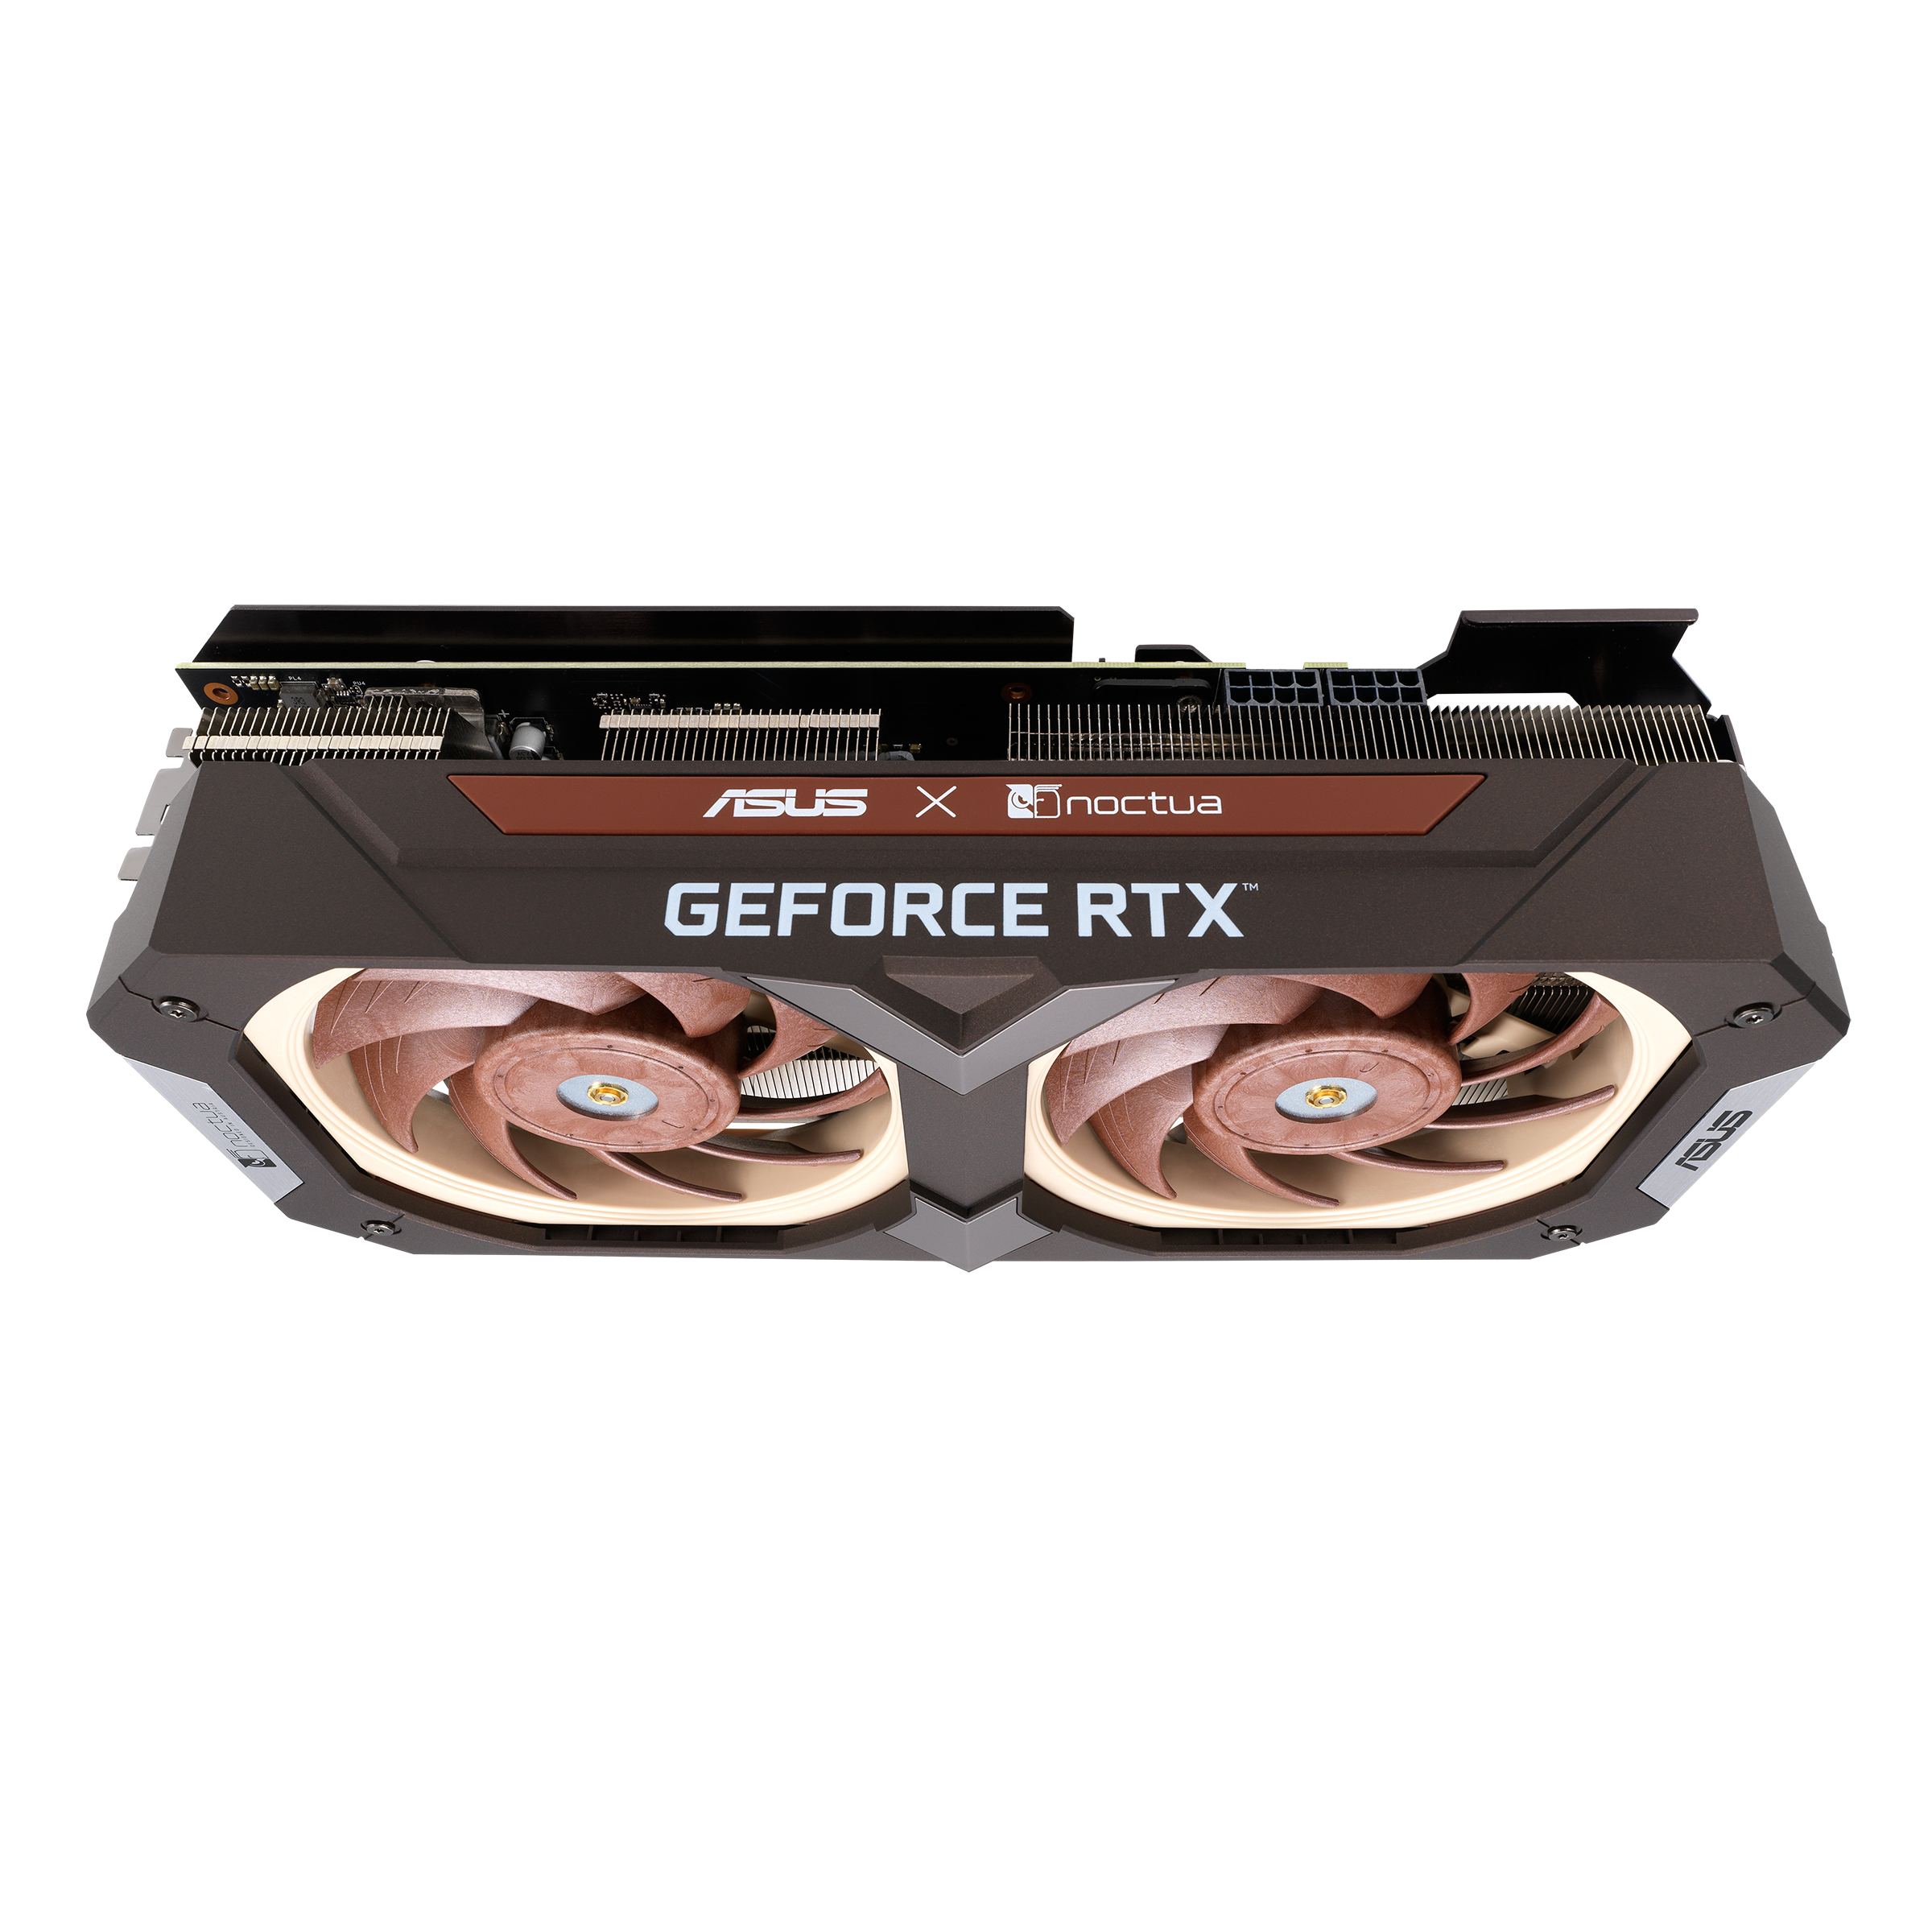 ASUS GeForce RTX 3070 Noctua OC Review - The Quietest Graphics Card